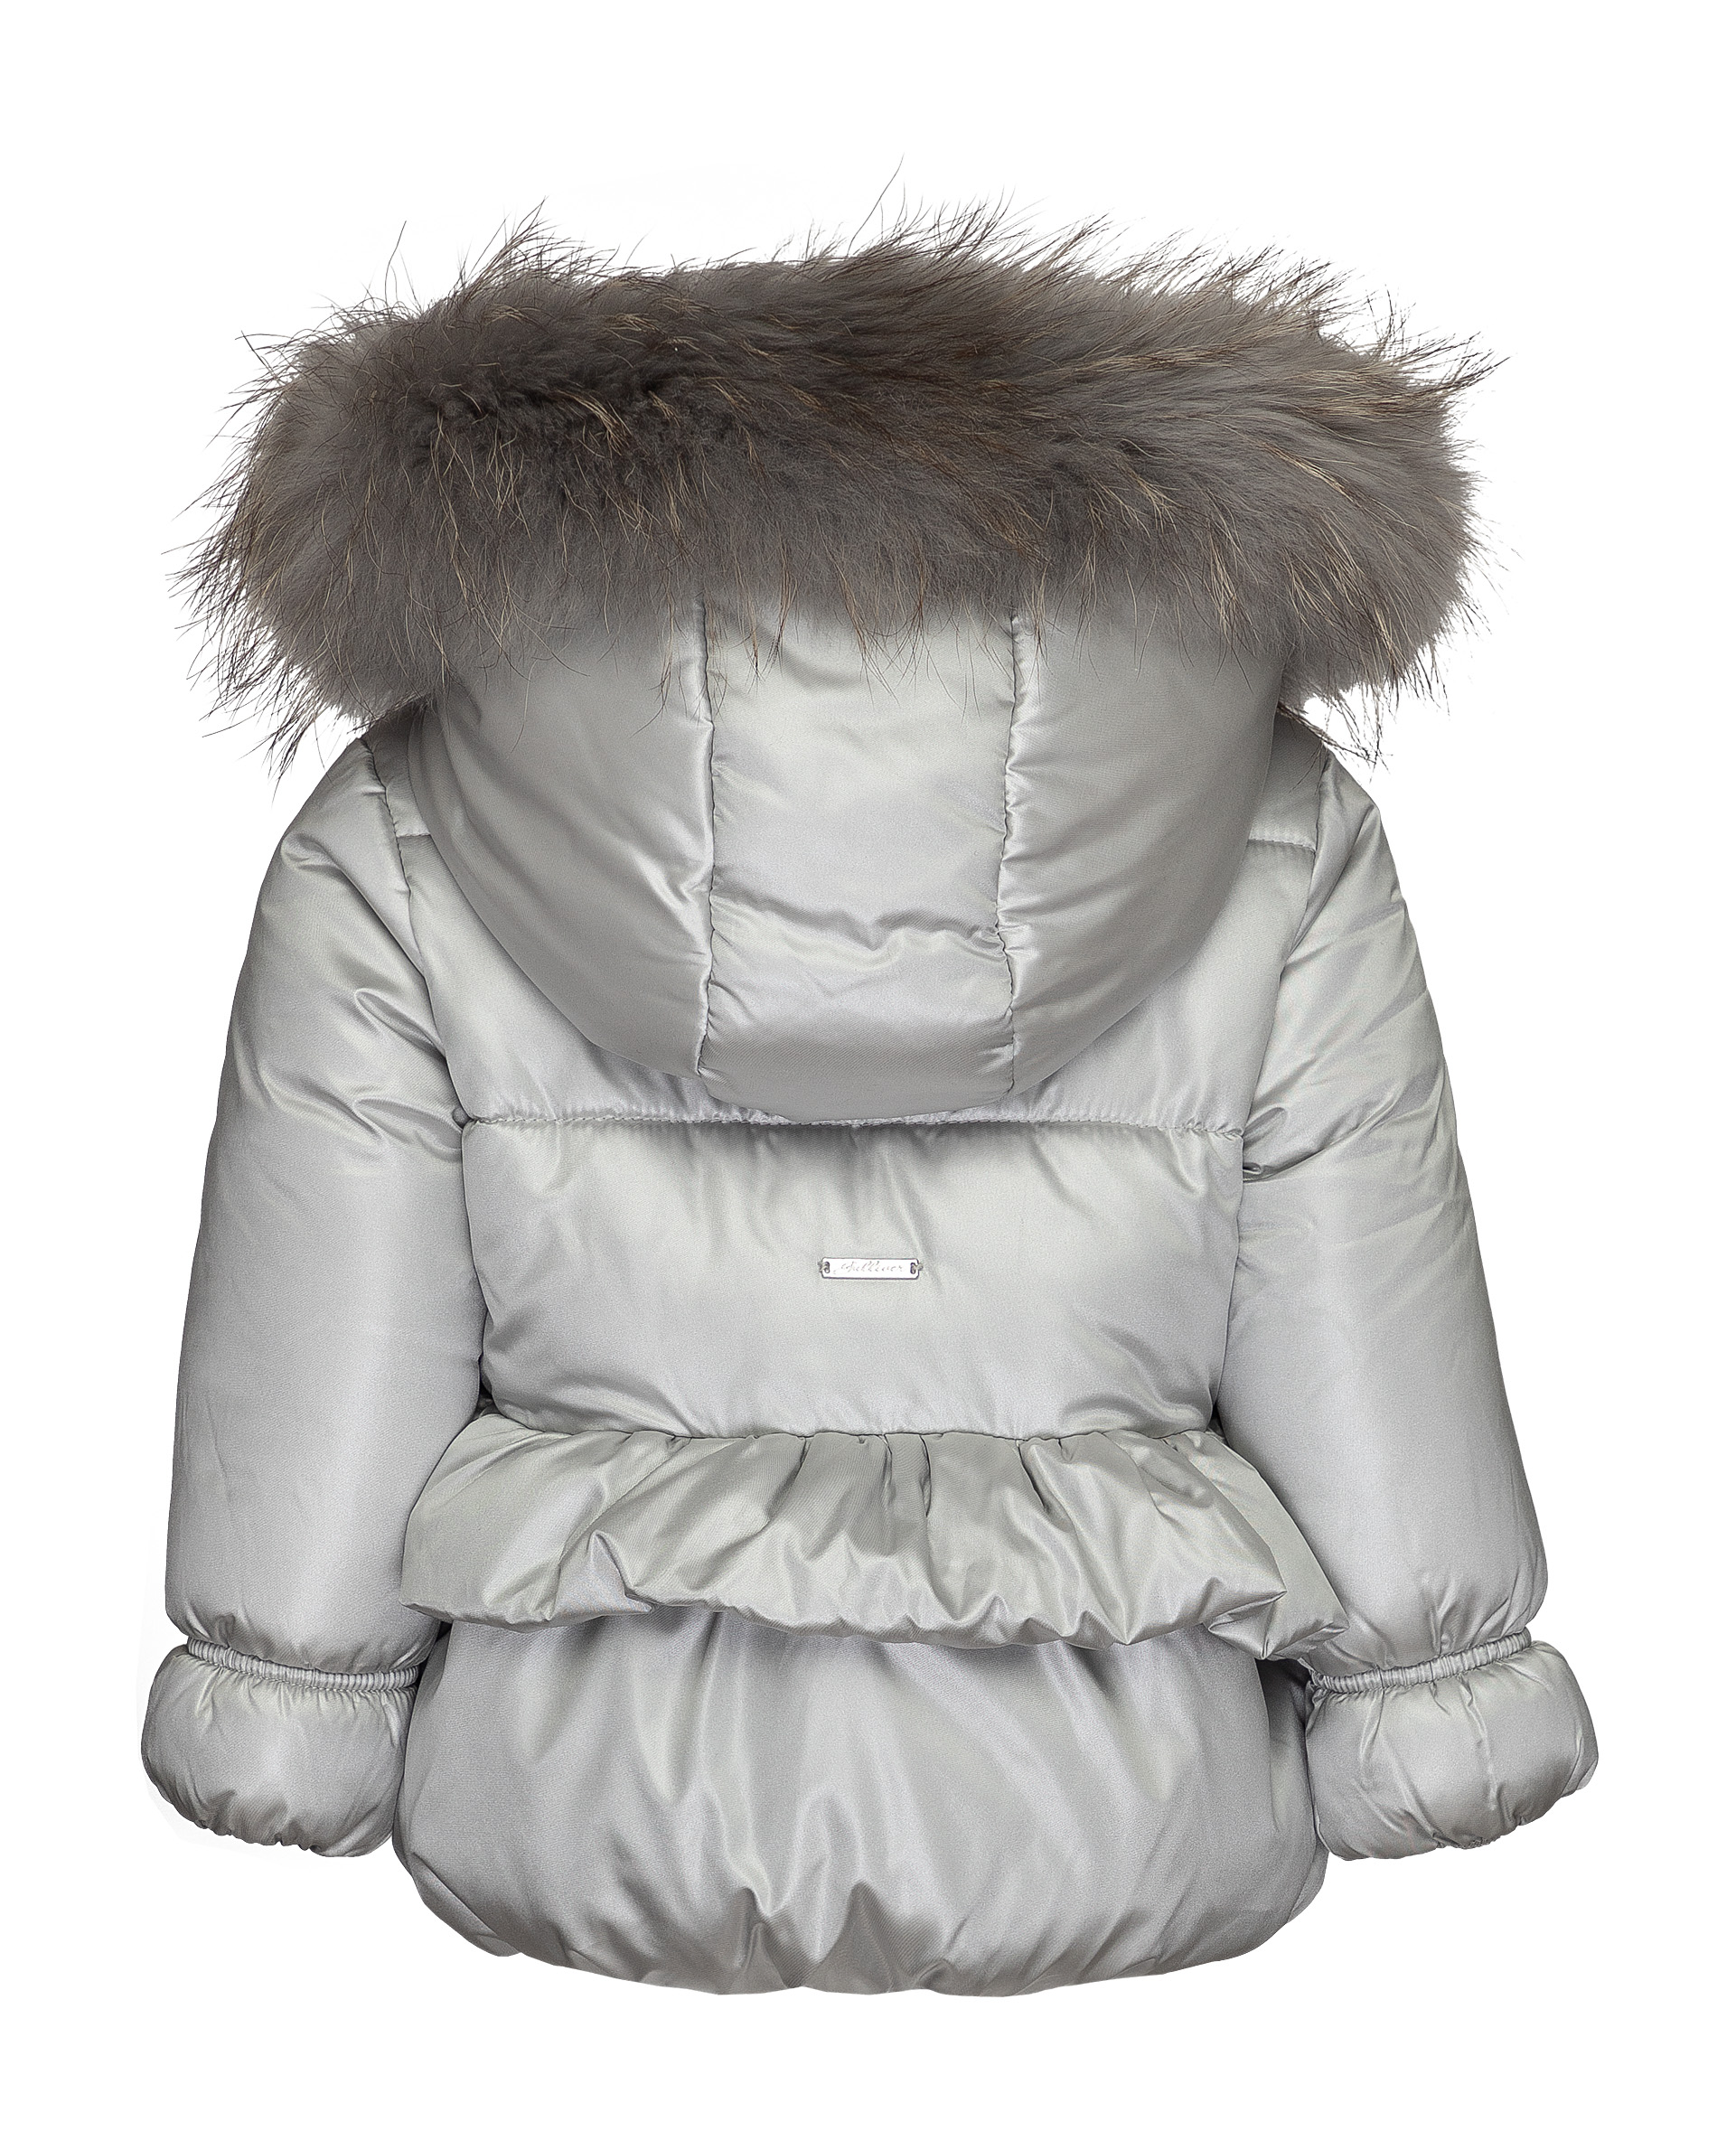 фото Зимняя куртка серебряного цвета gulliver gulliver baby